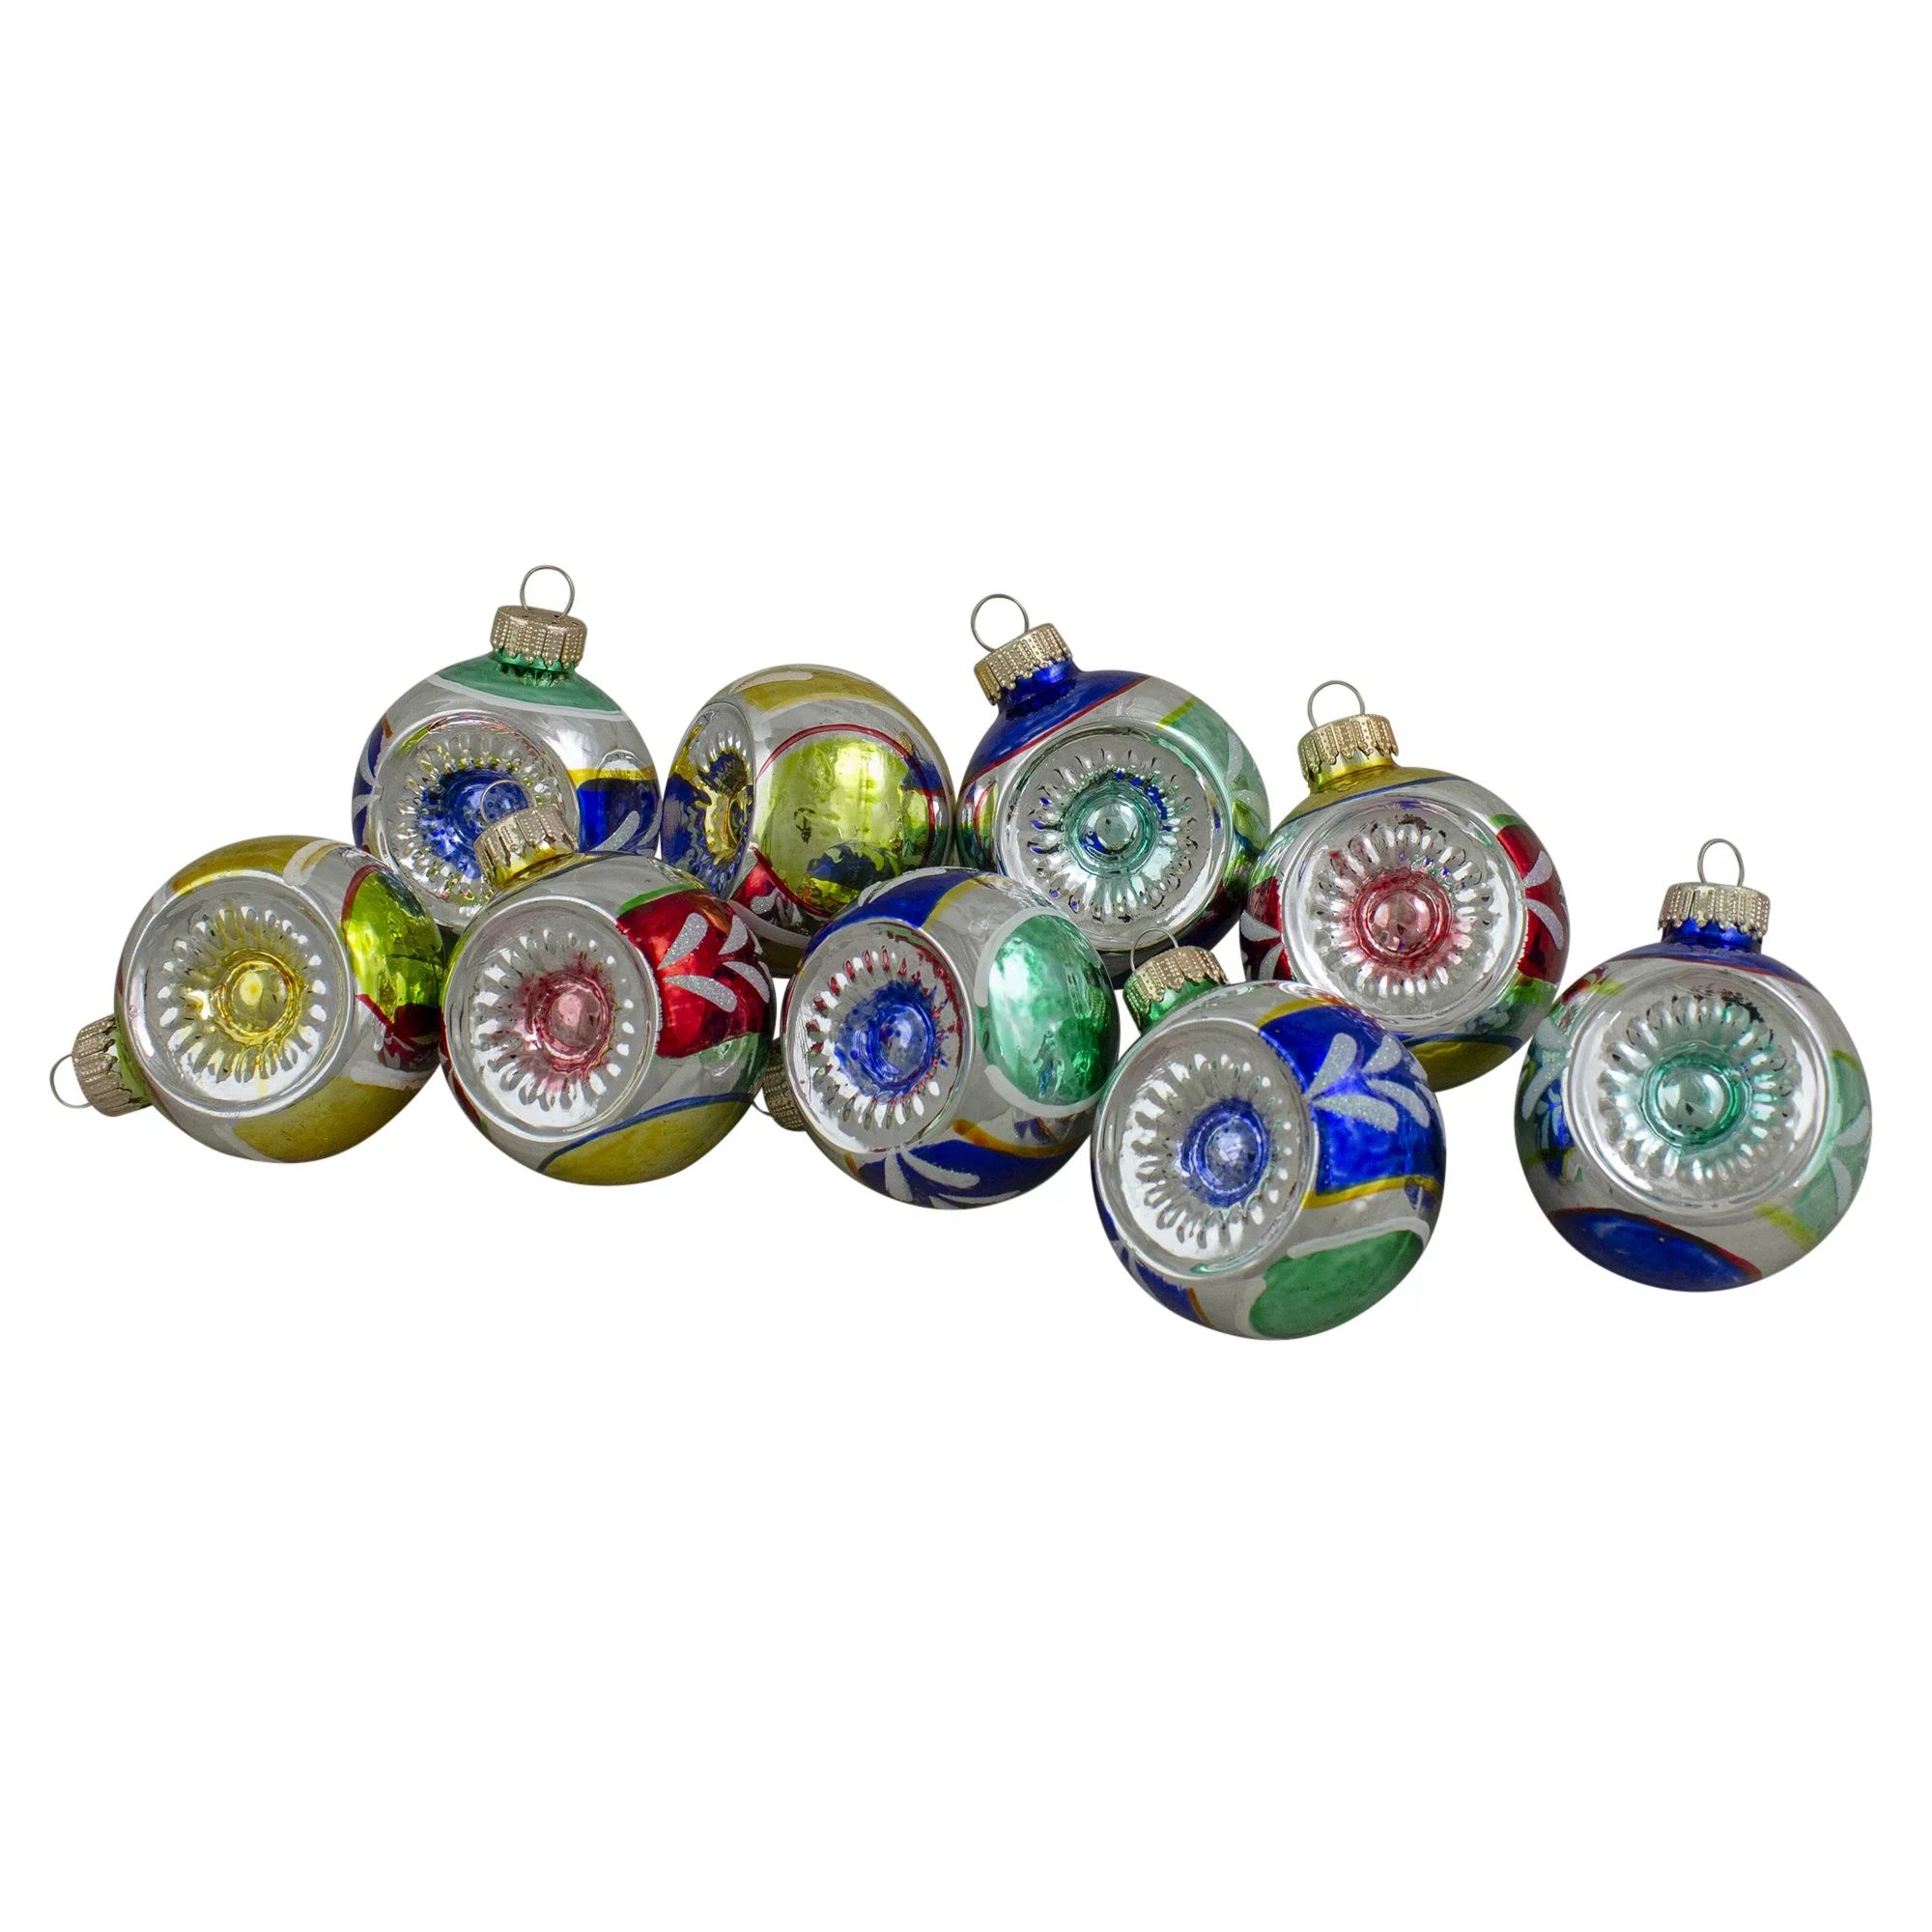 9ct Vibrantly Colored Retro Reflector Shiny Glass Christmas Ball Ornaments 2.25" (55mm) | Walmart (US)